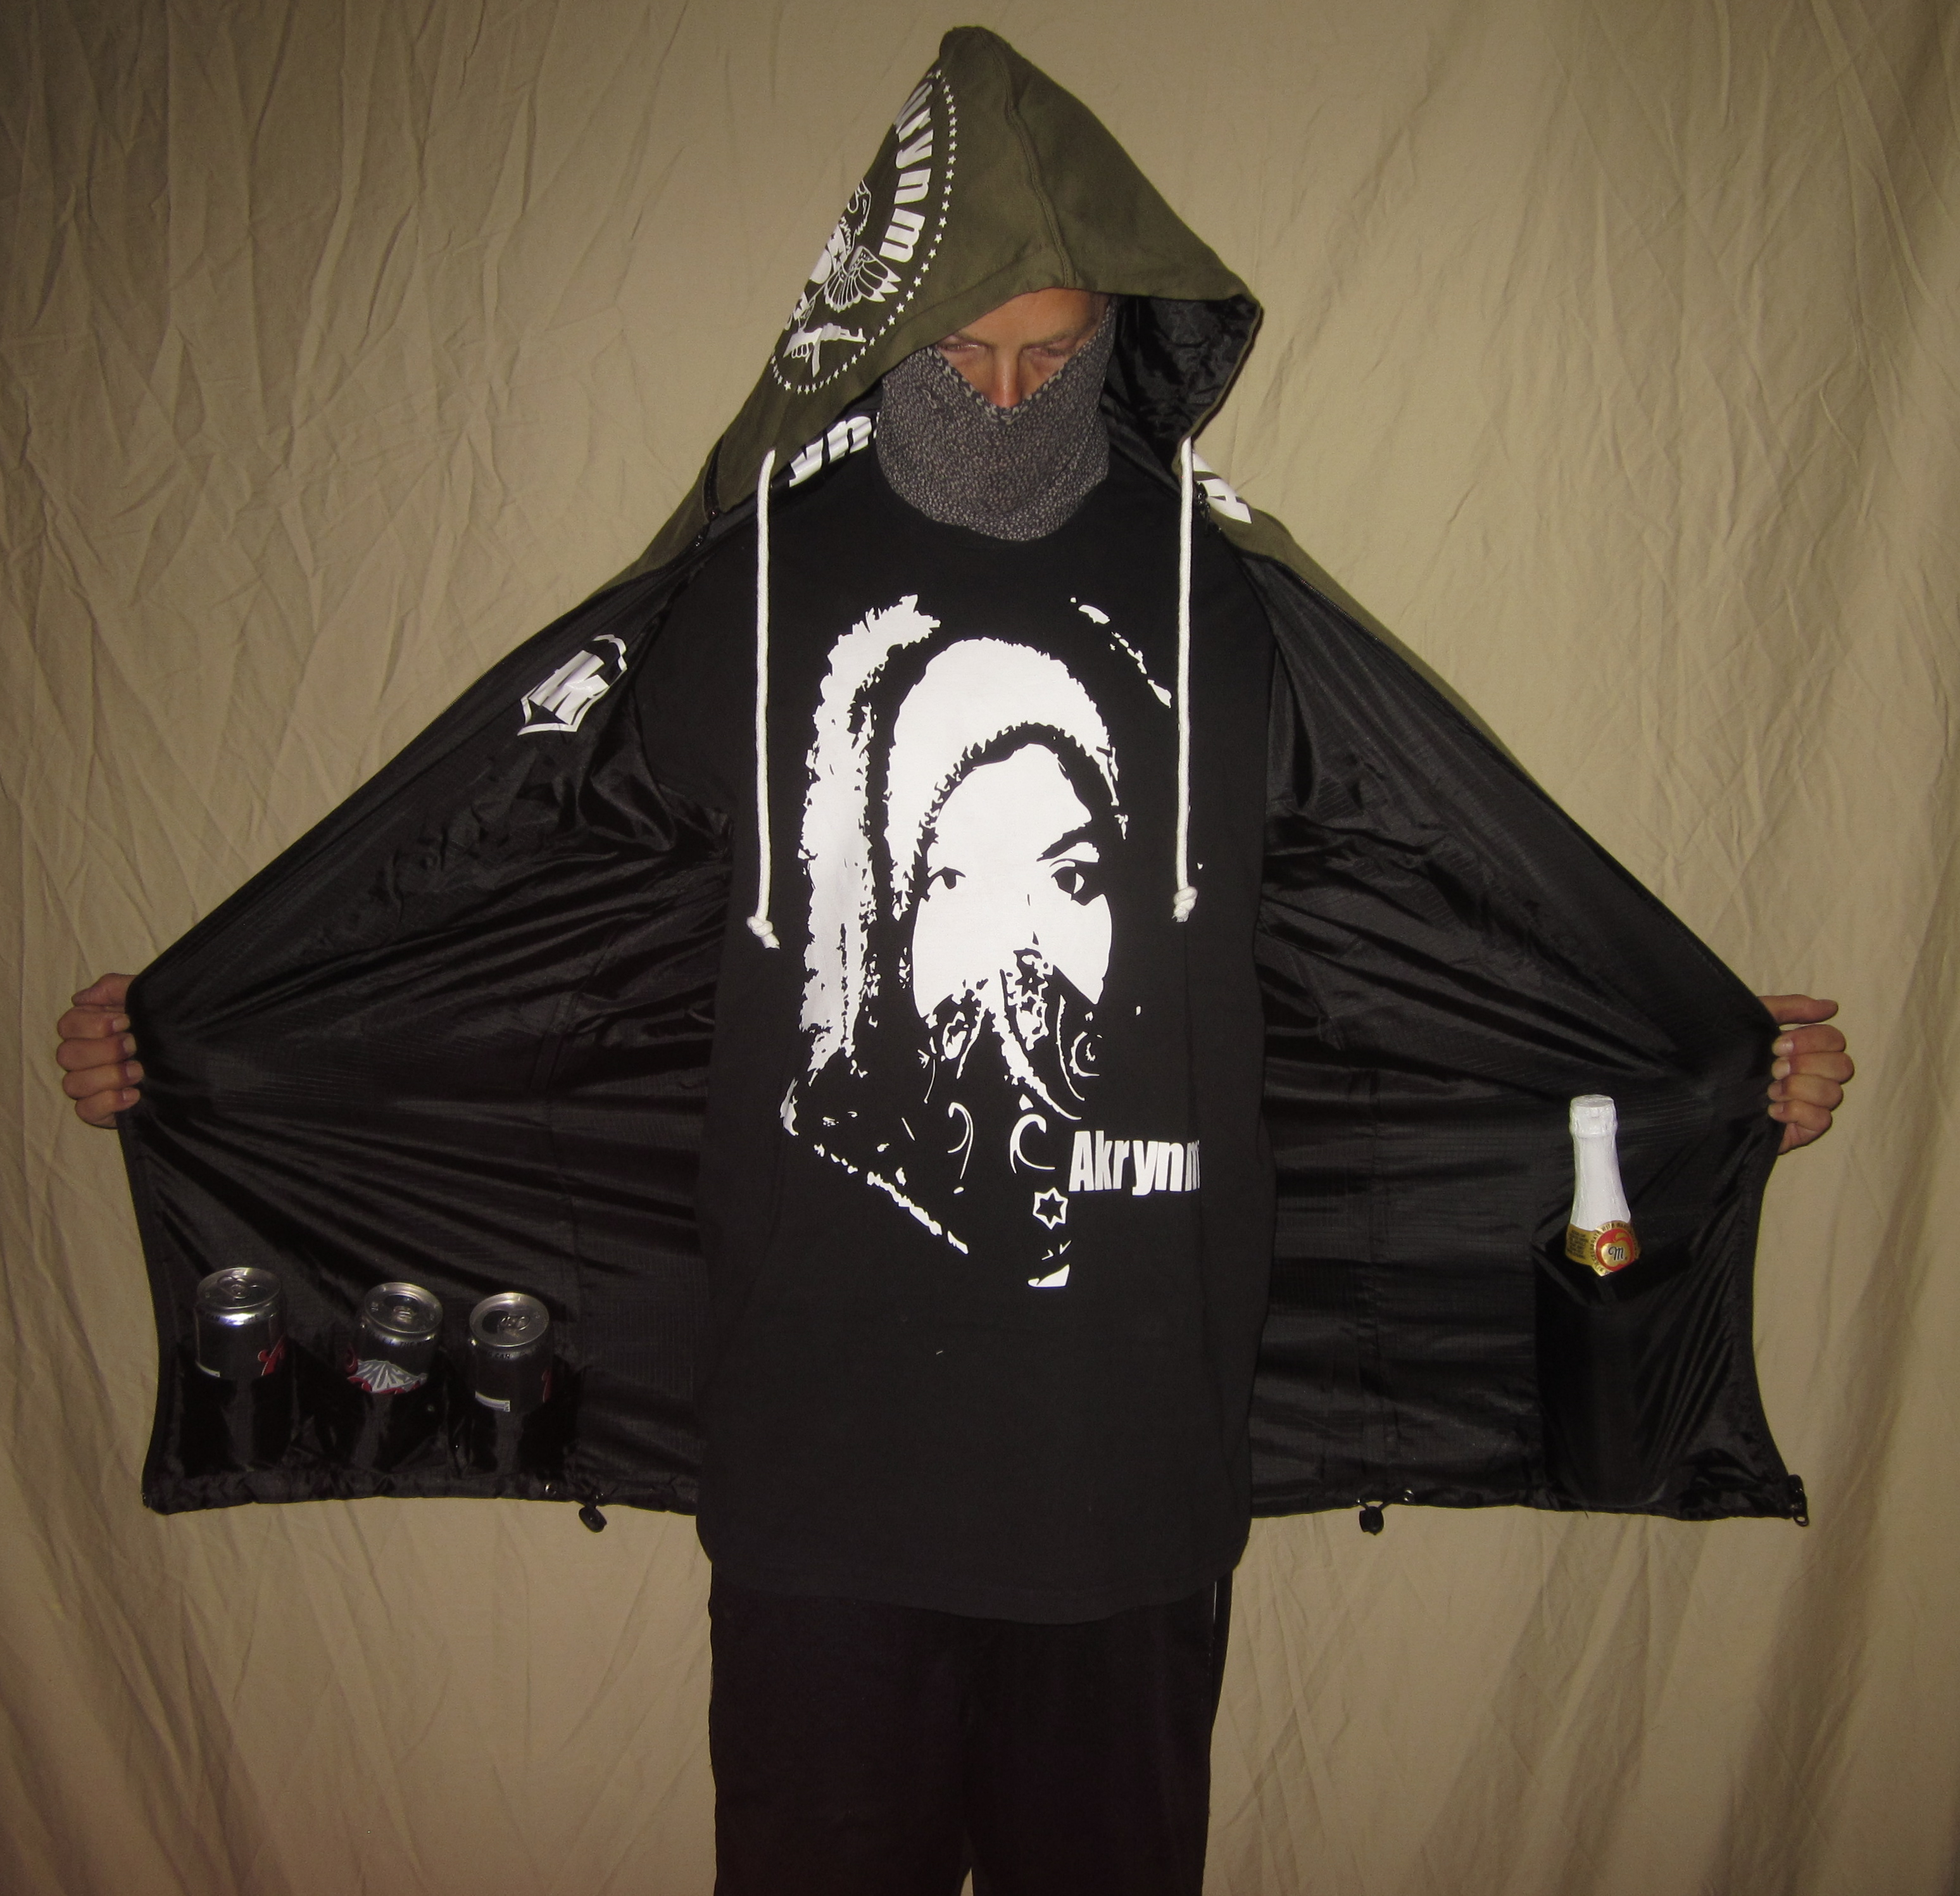 A Tall "Akrynm Army hoodie "